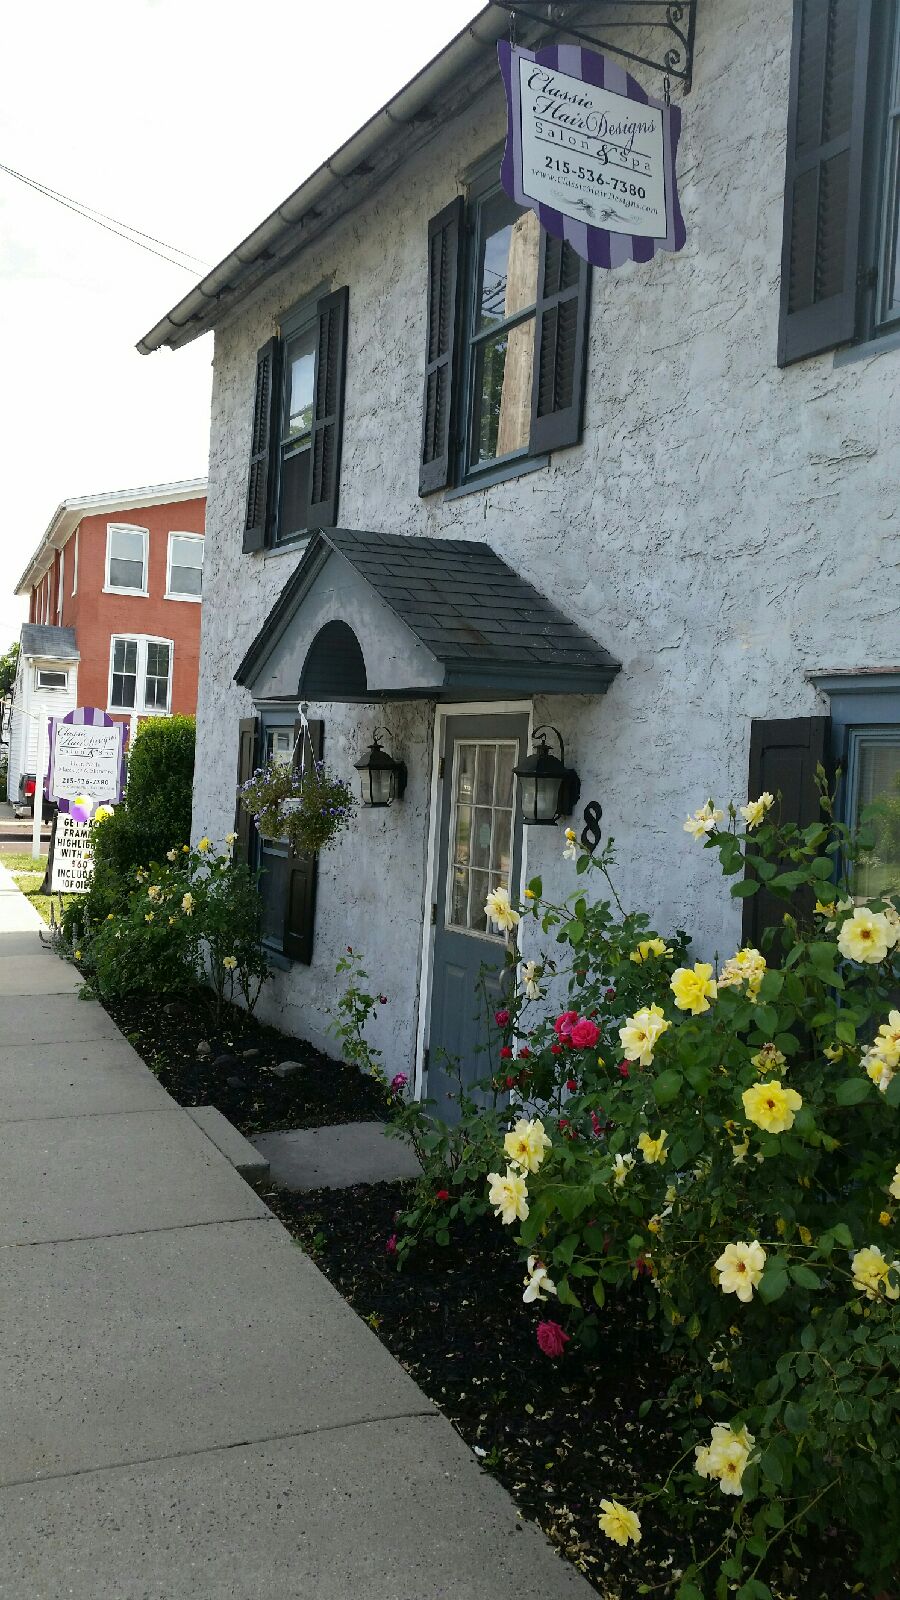 Lavender Rose Salon & Spa | 8 Main St S, Trumbauersville, PA 18970 | Phone: (215) 536-7380